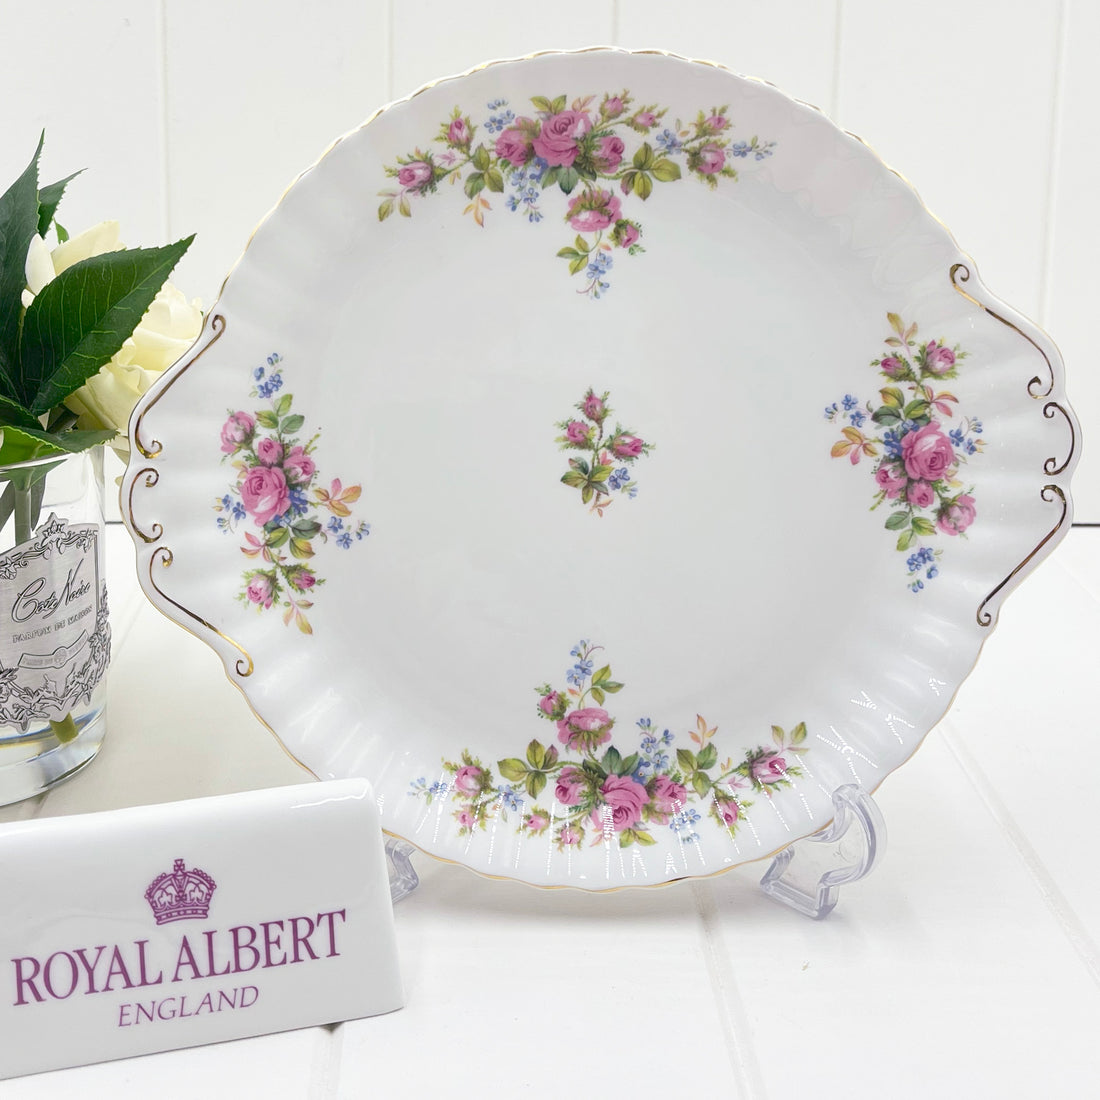 Royal Albert Vintage Moss Rose Medium Tabbed Cake Plate